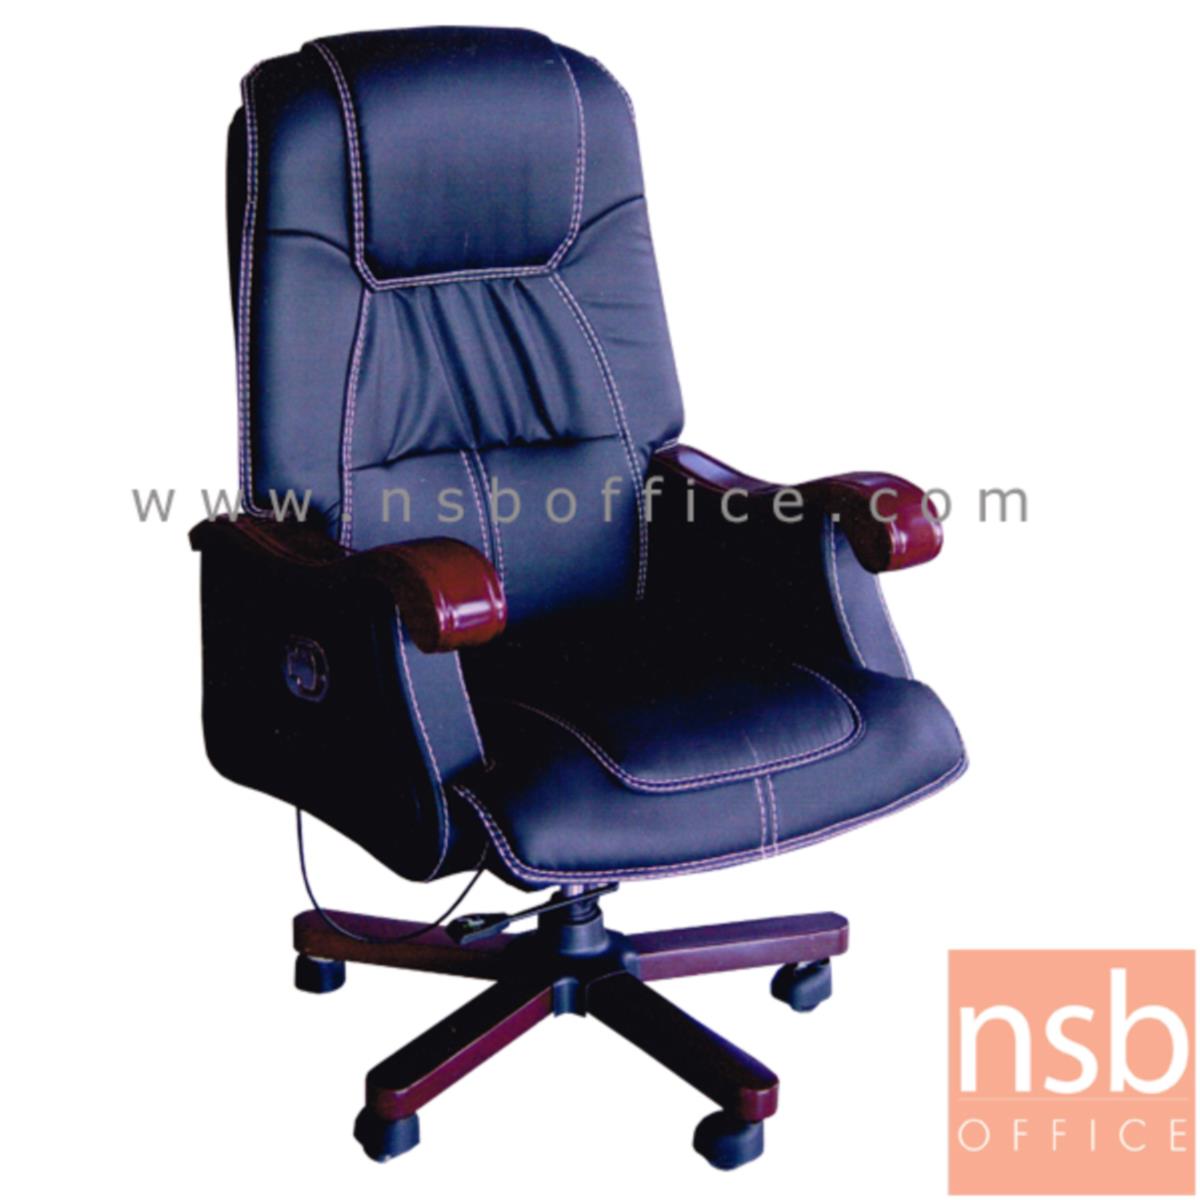 B25A078:เก้าอี้ผู้บริหารหนังเทียม รุ่น Malkovich (มัลโควิช)   โช๊คแก๊ส มีก้อนโยก ขาไม้